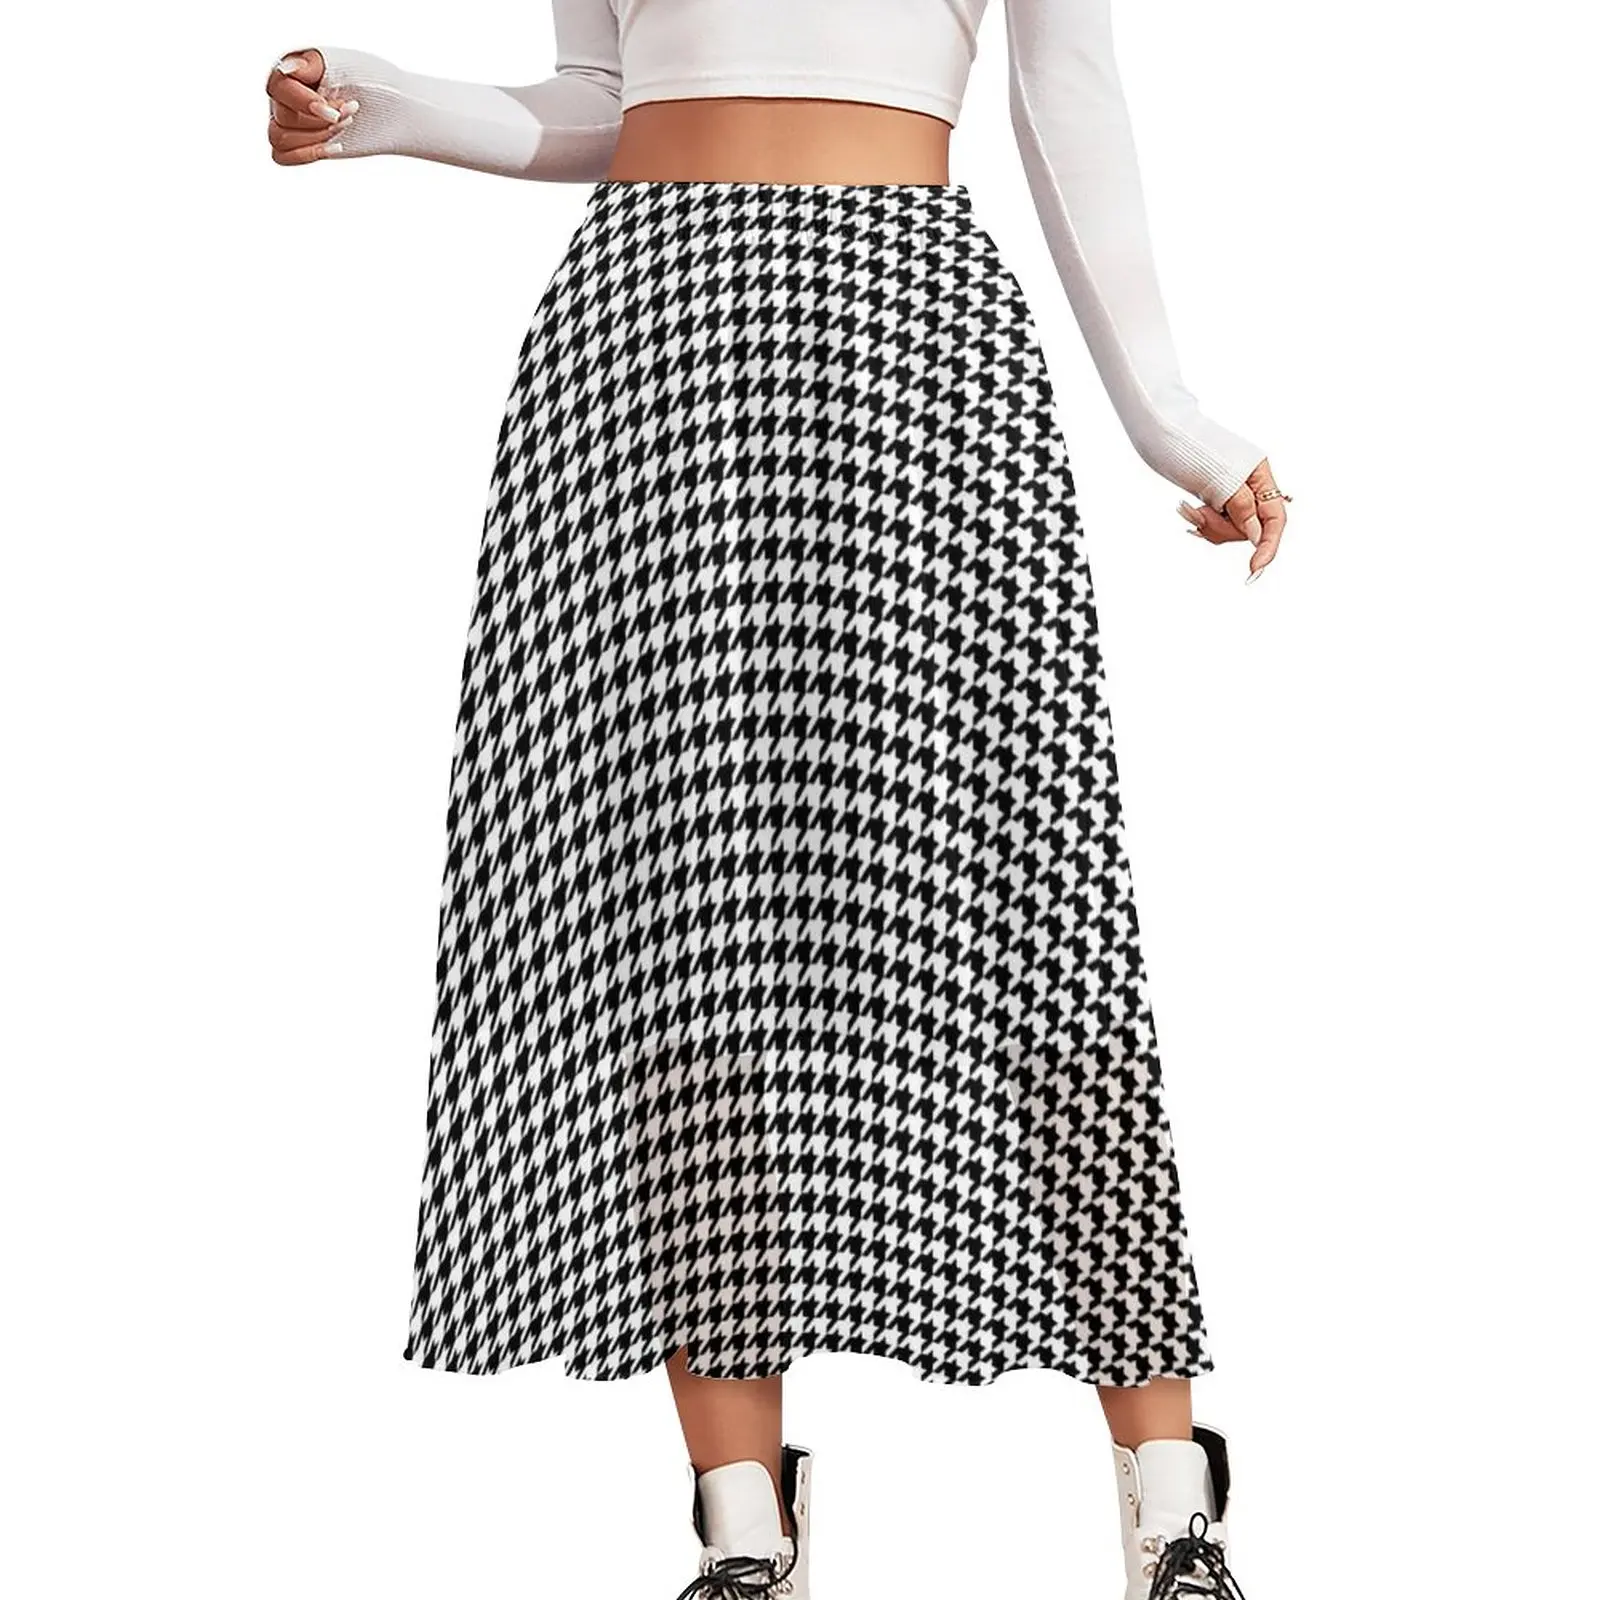 Black White Houndstooth Chiffon Skirt Trendy Deco Chic Pattern Y2K Casual Skirts Woman Elegant Boho Skirt Pattern Bottoms Gift